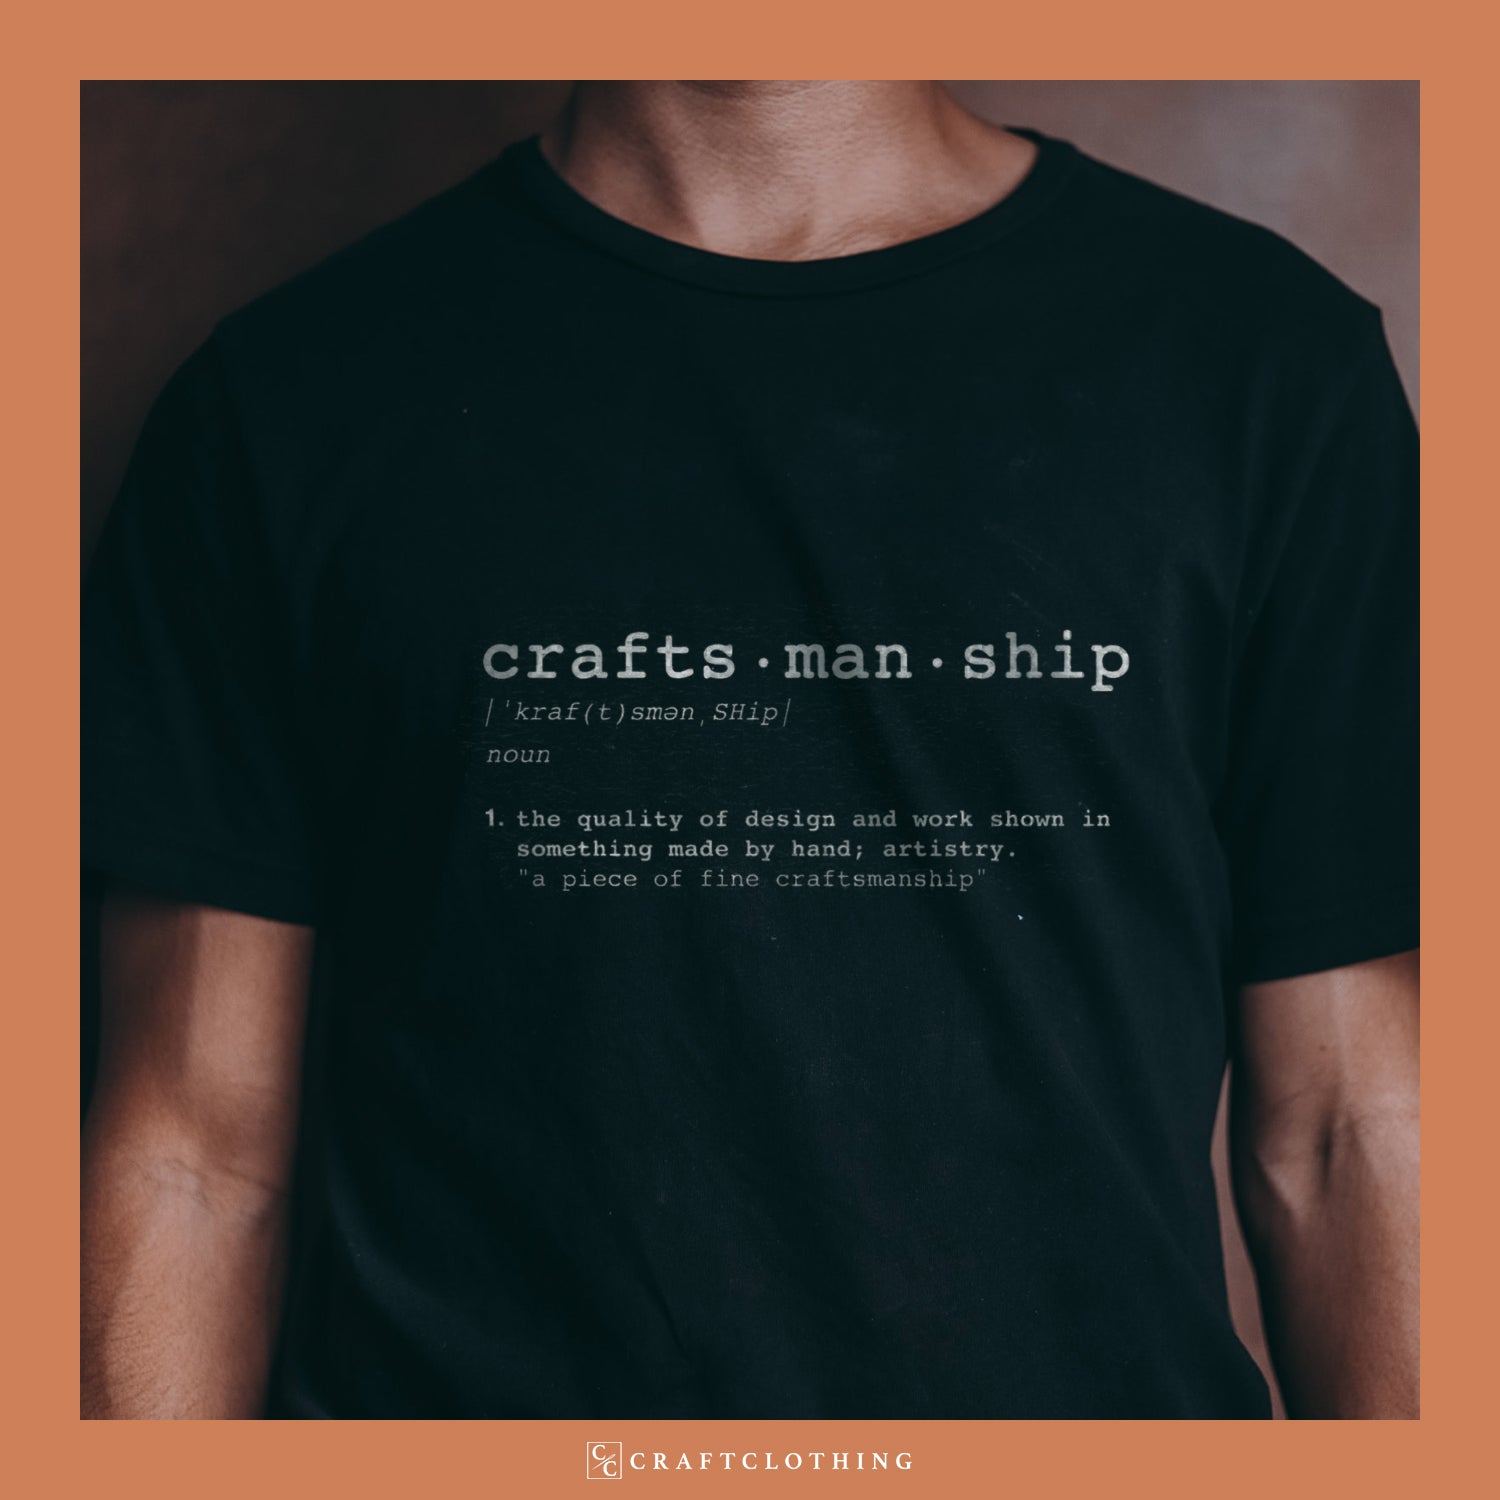 crafts ∙ man ∙ ship